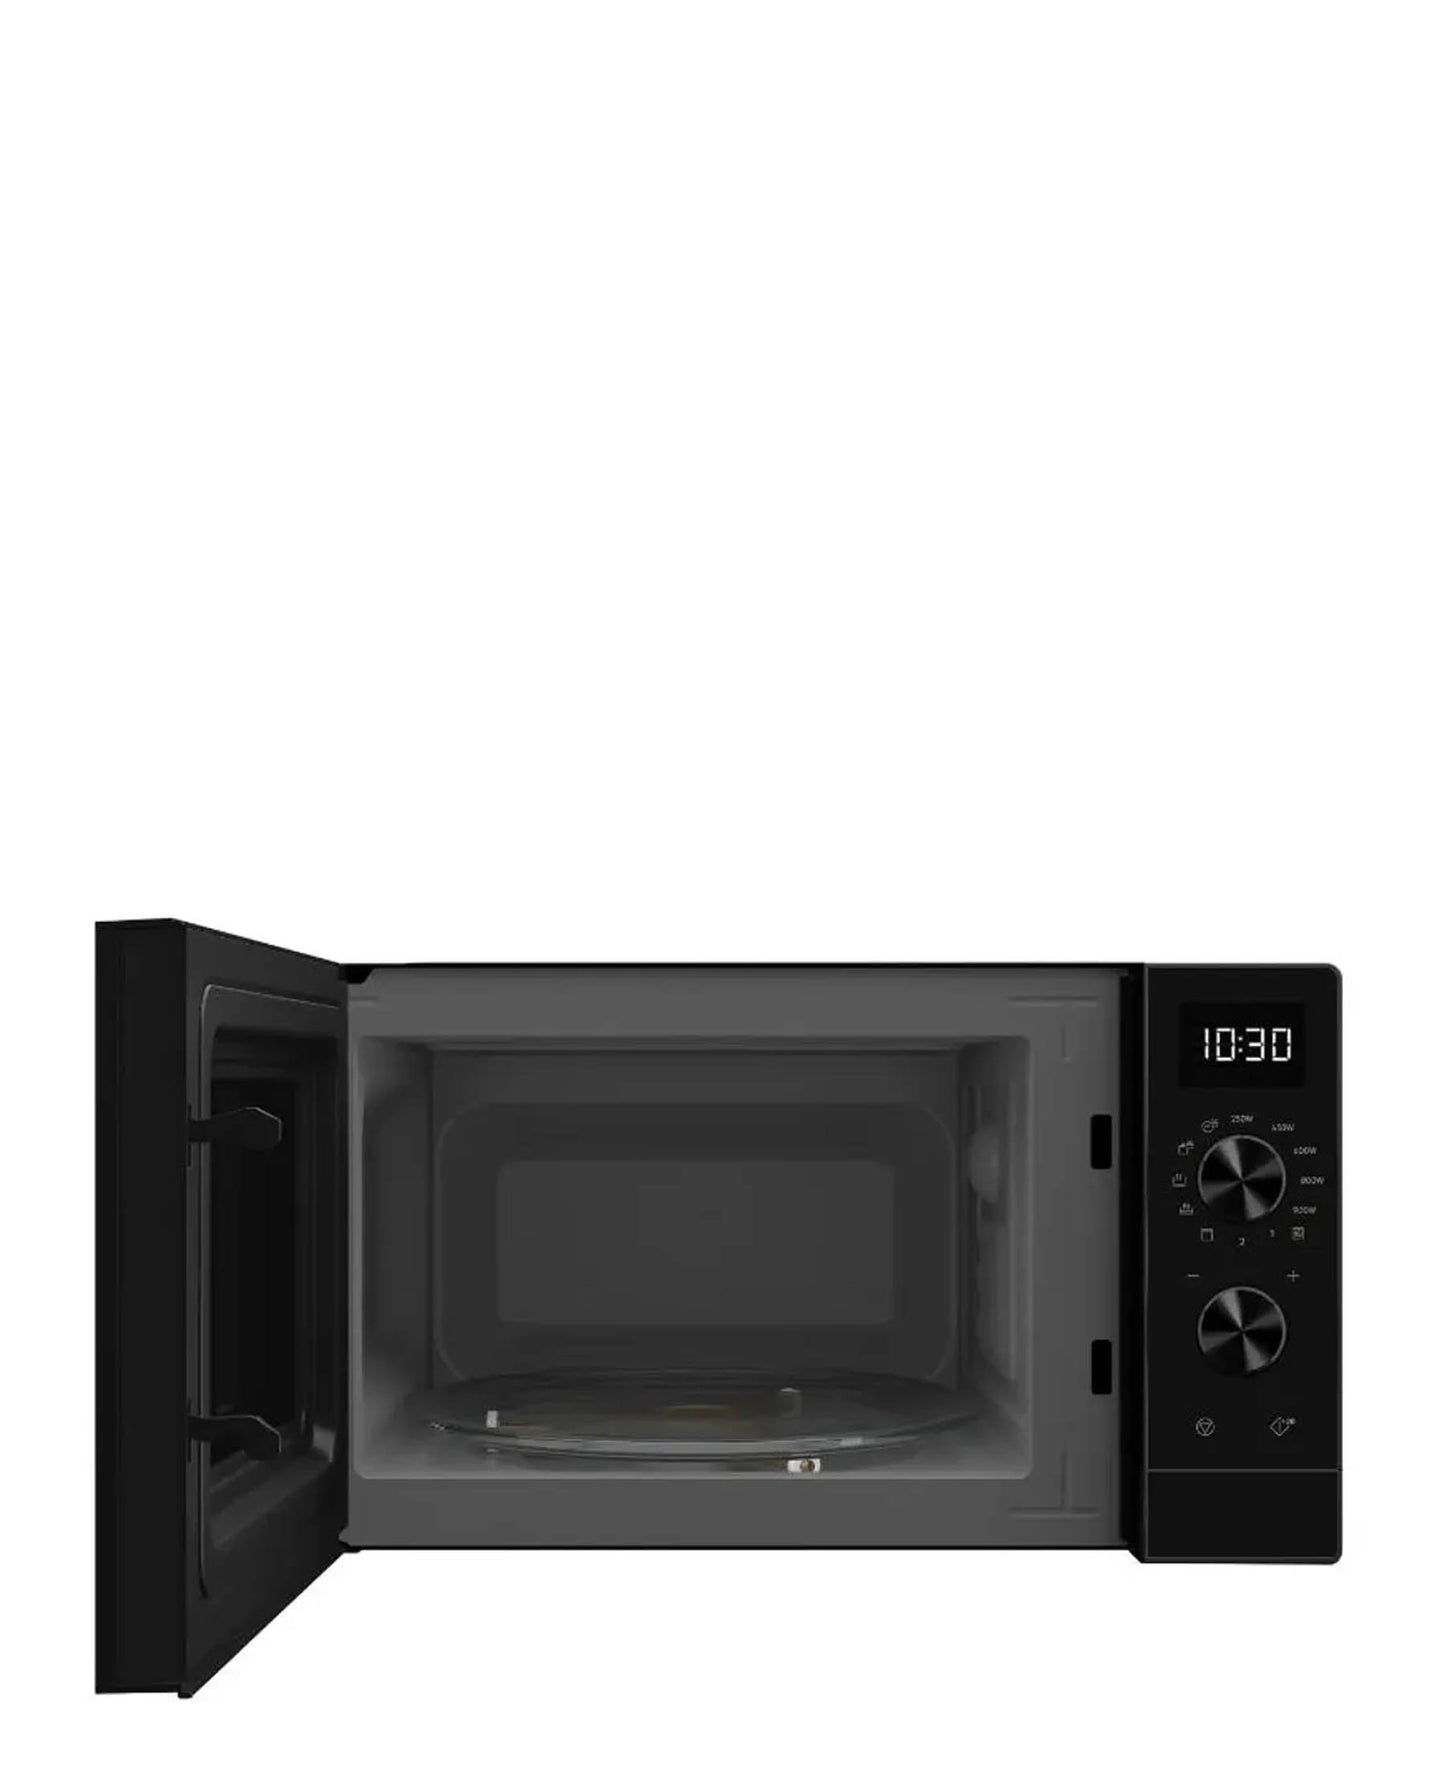 AEG 25L 7000 Series Grill Microwave Oven  -  Matte Black